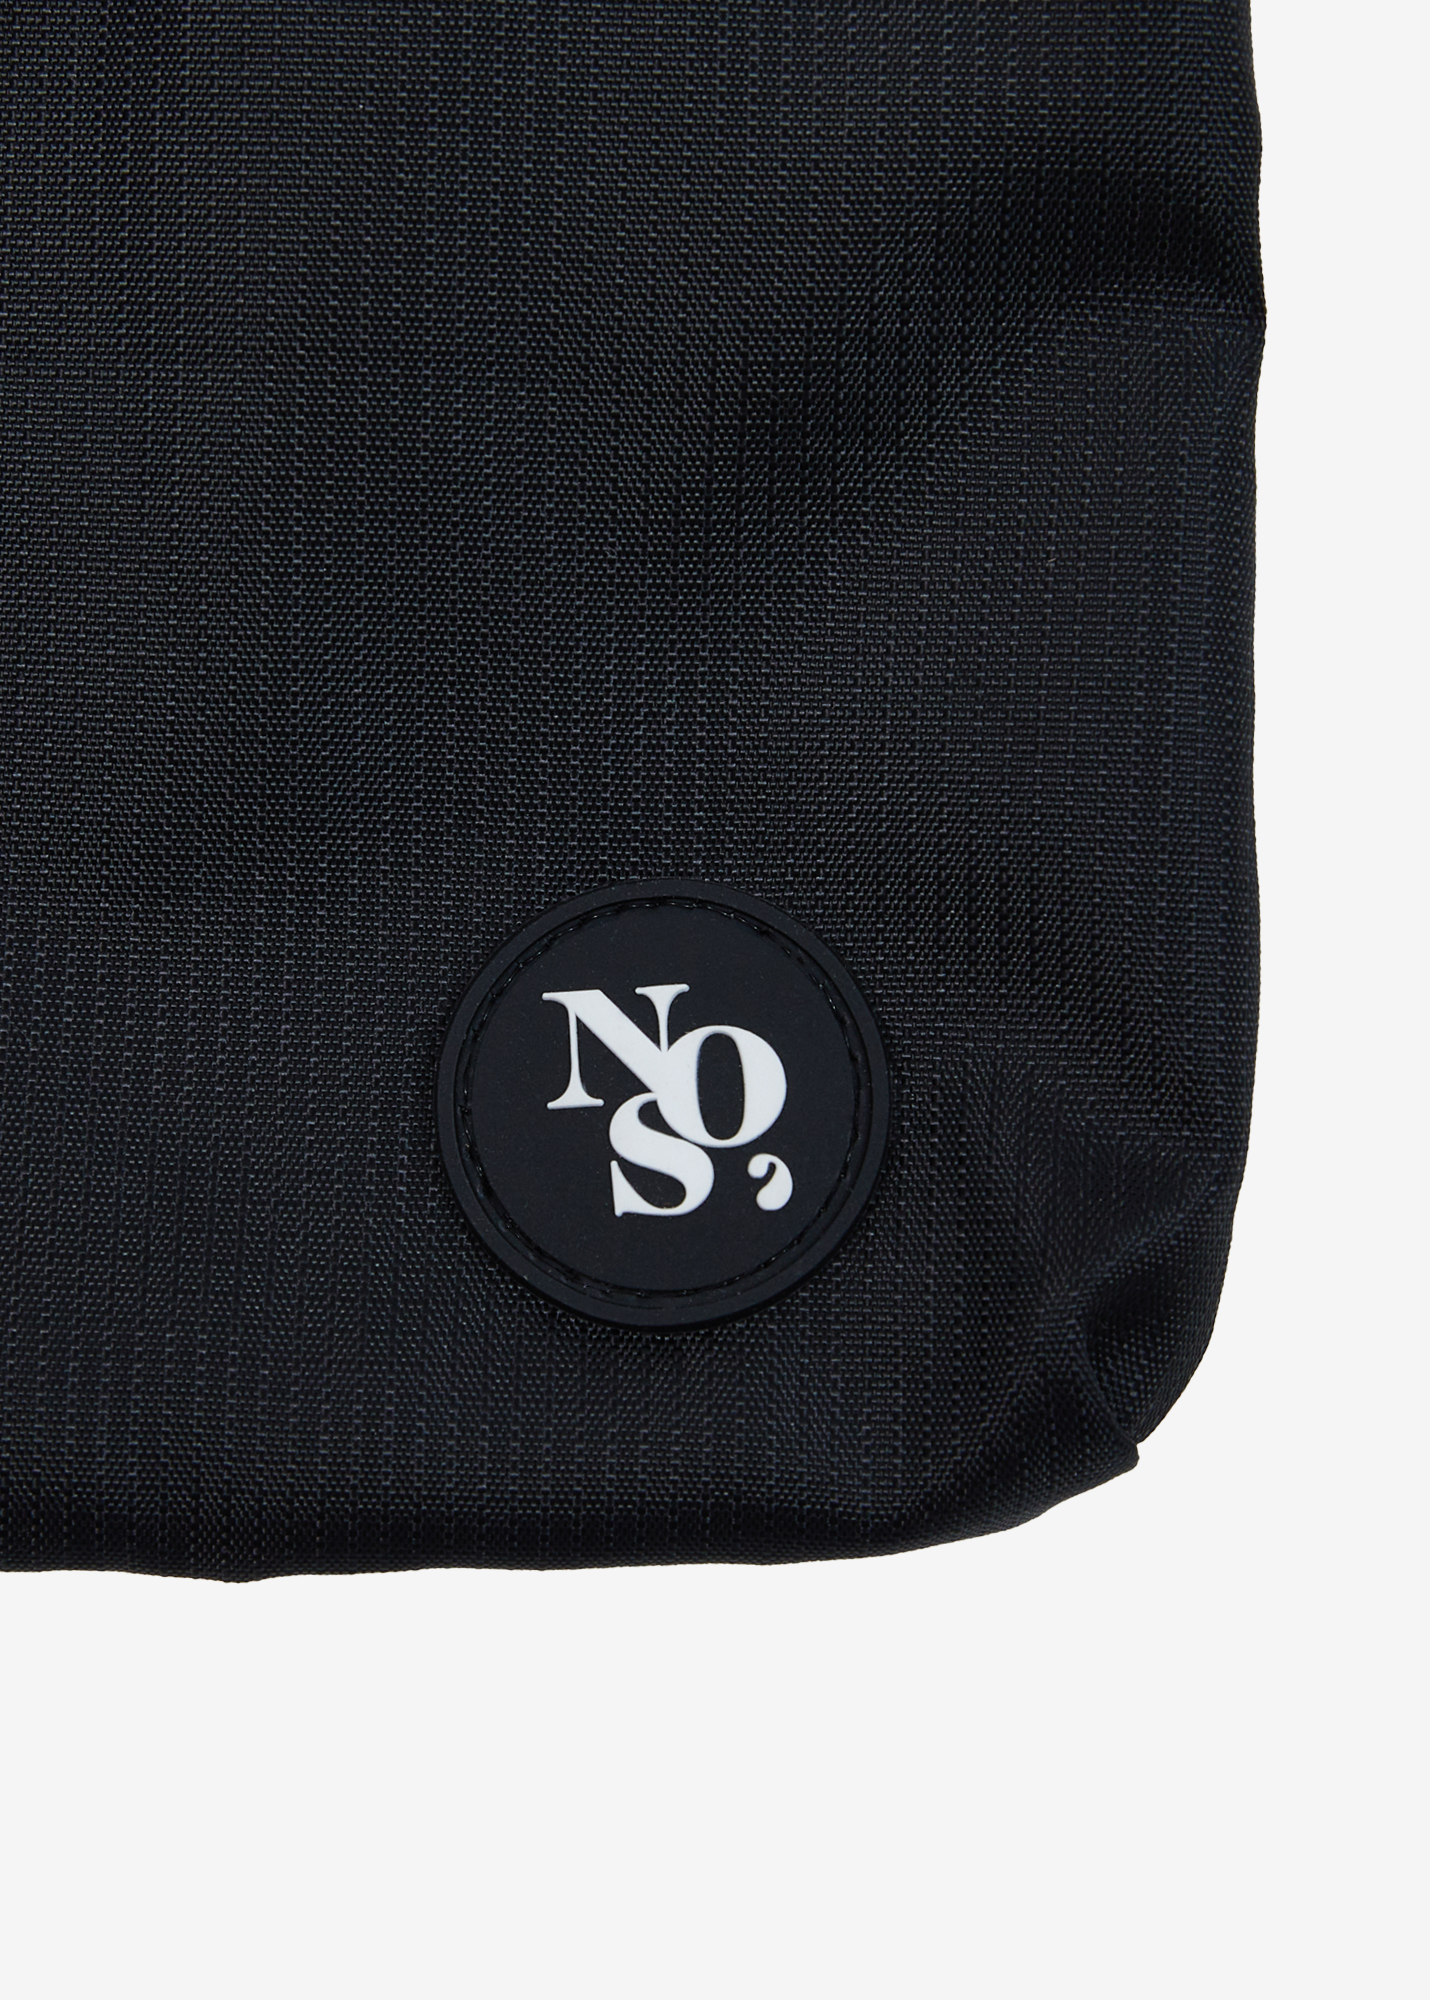 NOS7 Logobelt crossbody bag - Black